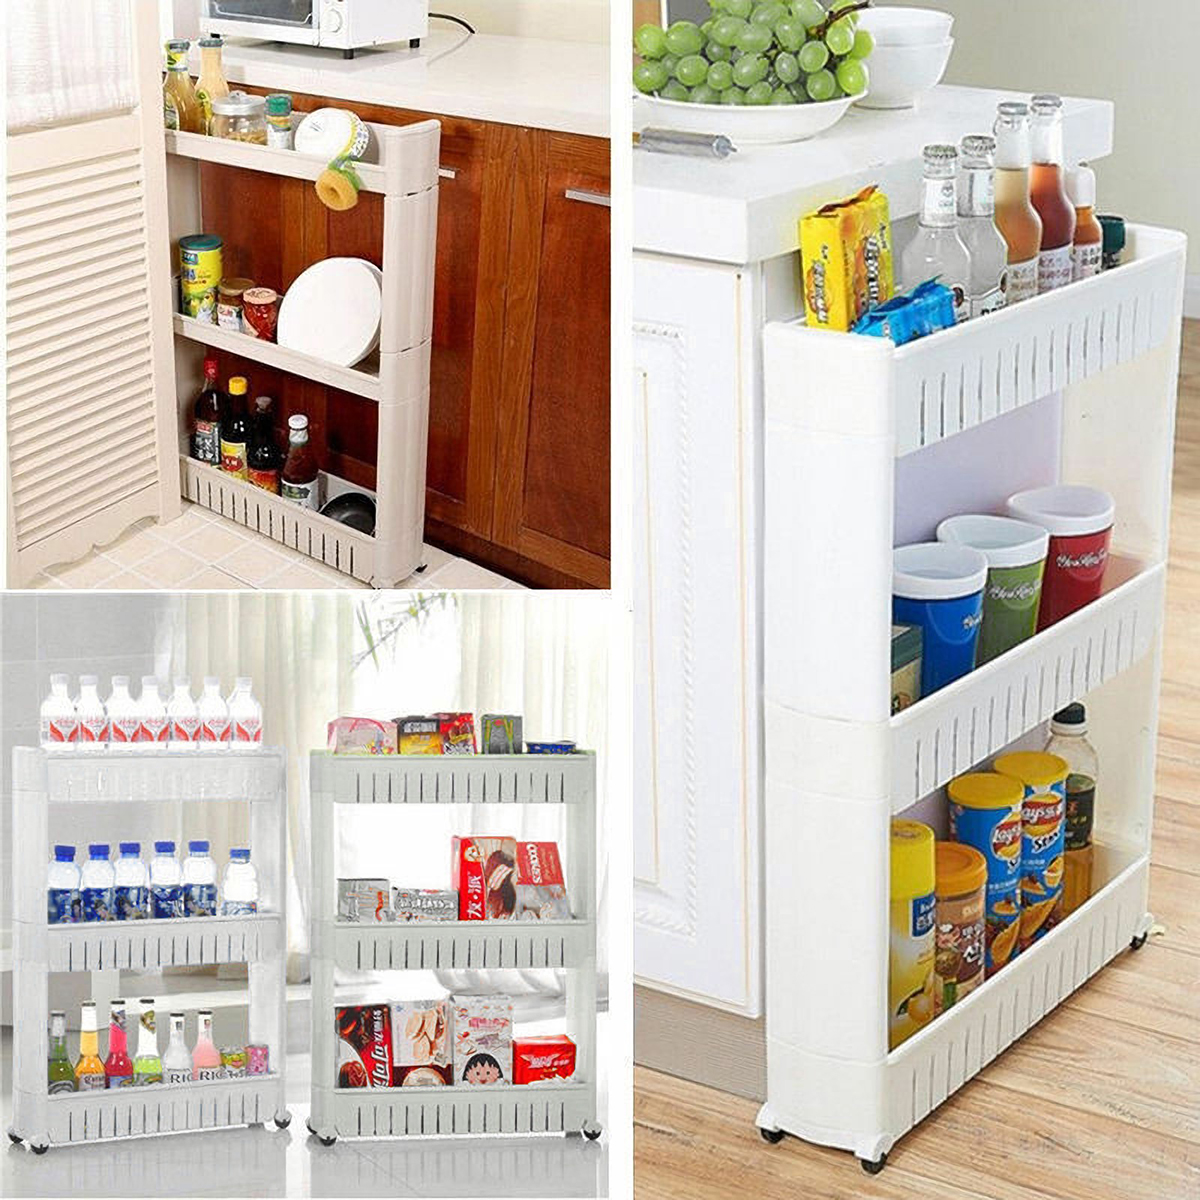 34-Layers-Movable-Storage-Rack-Crevice-Storage-Shelf--Organizer-with-Wheel-Refrigerator-Crevice-Stor-1756998-6